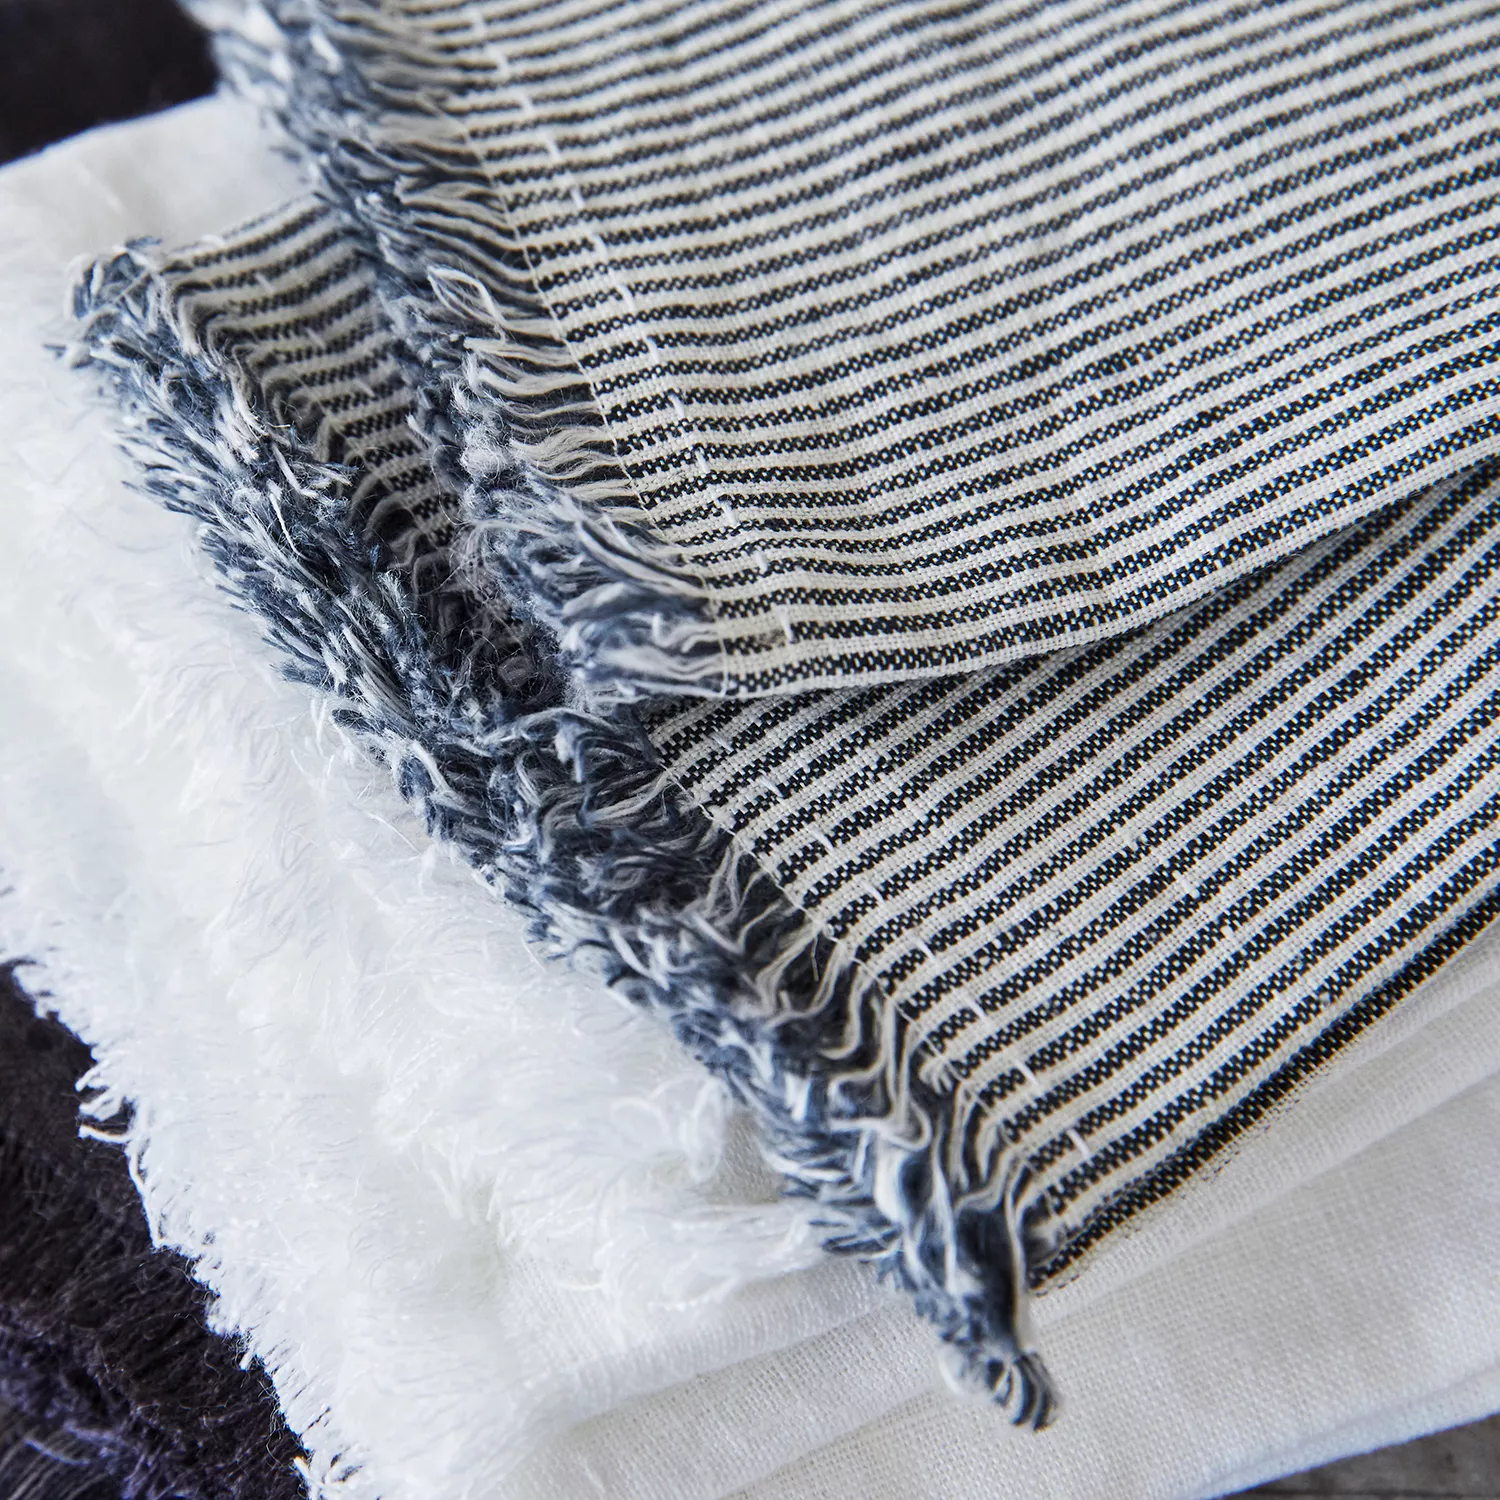 Sur La Table Frayed Stripe Linen Napkins, Set of 4